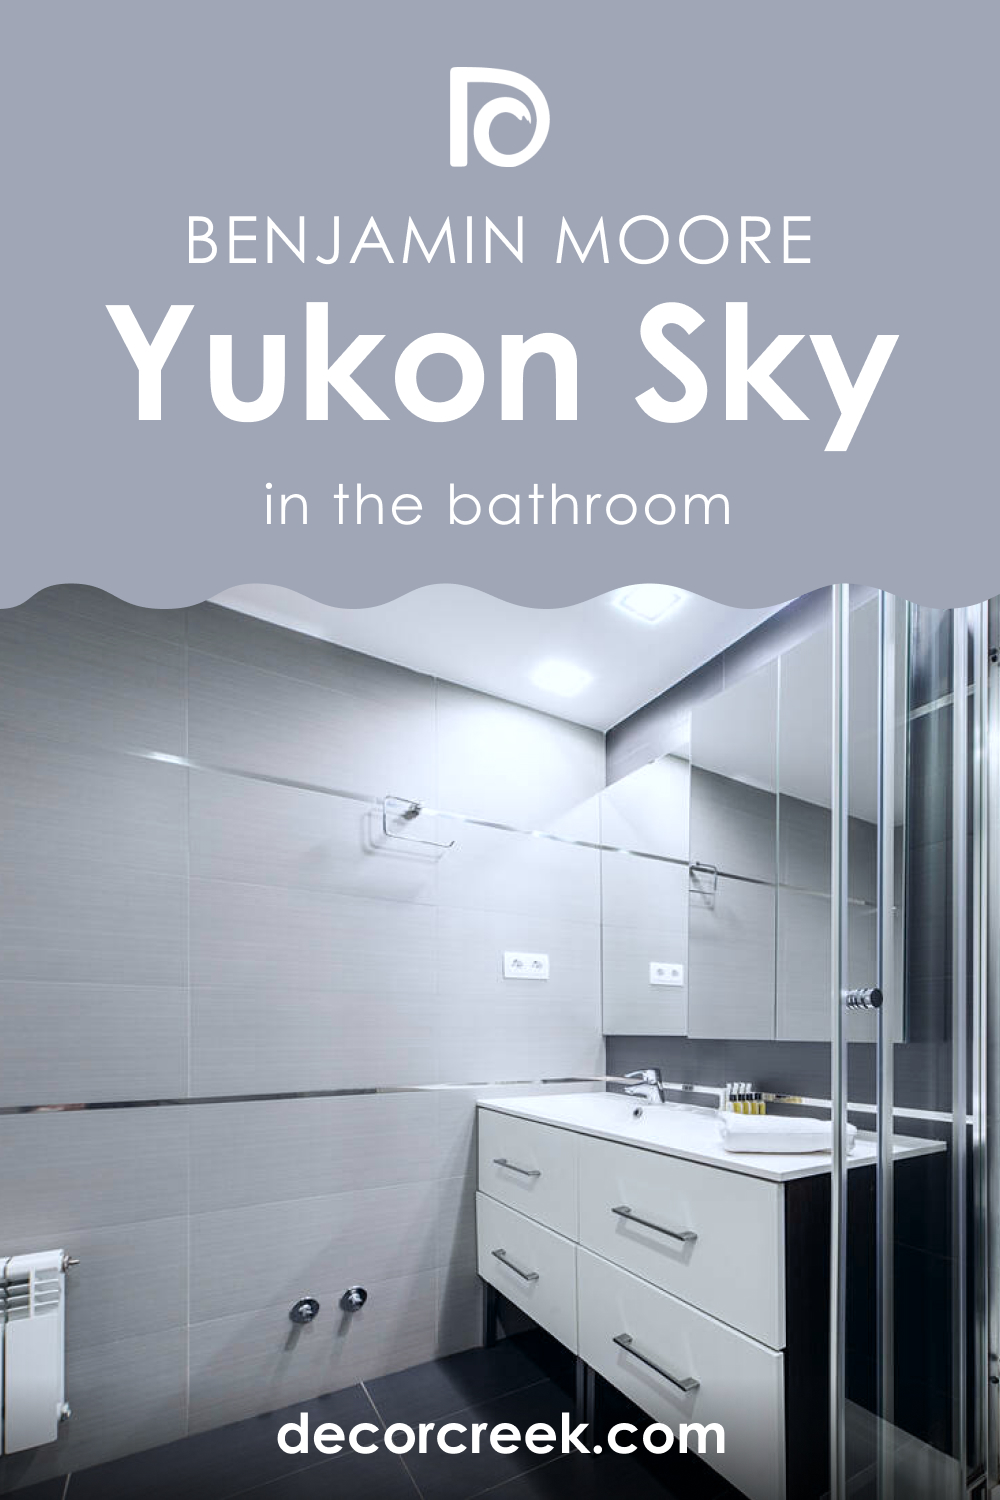 How to Use Yukon Sky 1439 in the Bathroom?